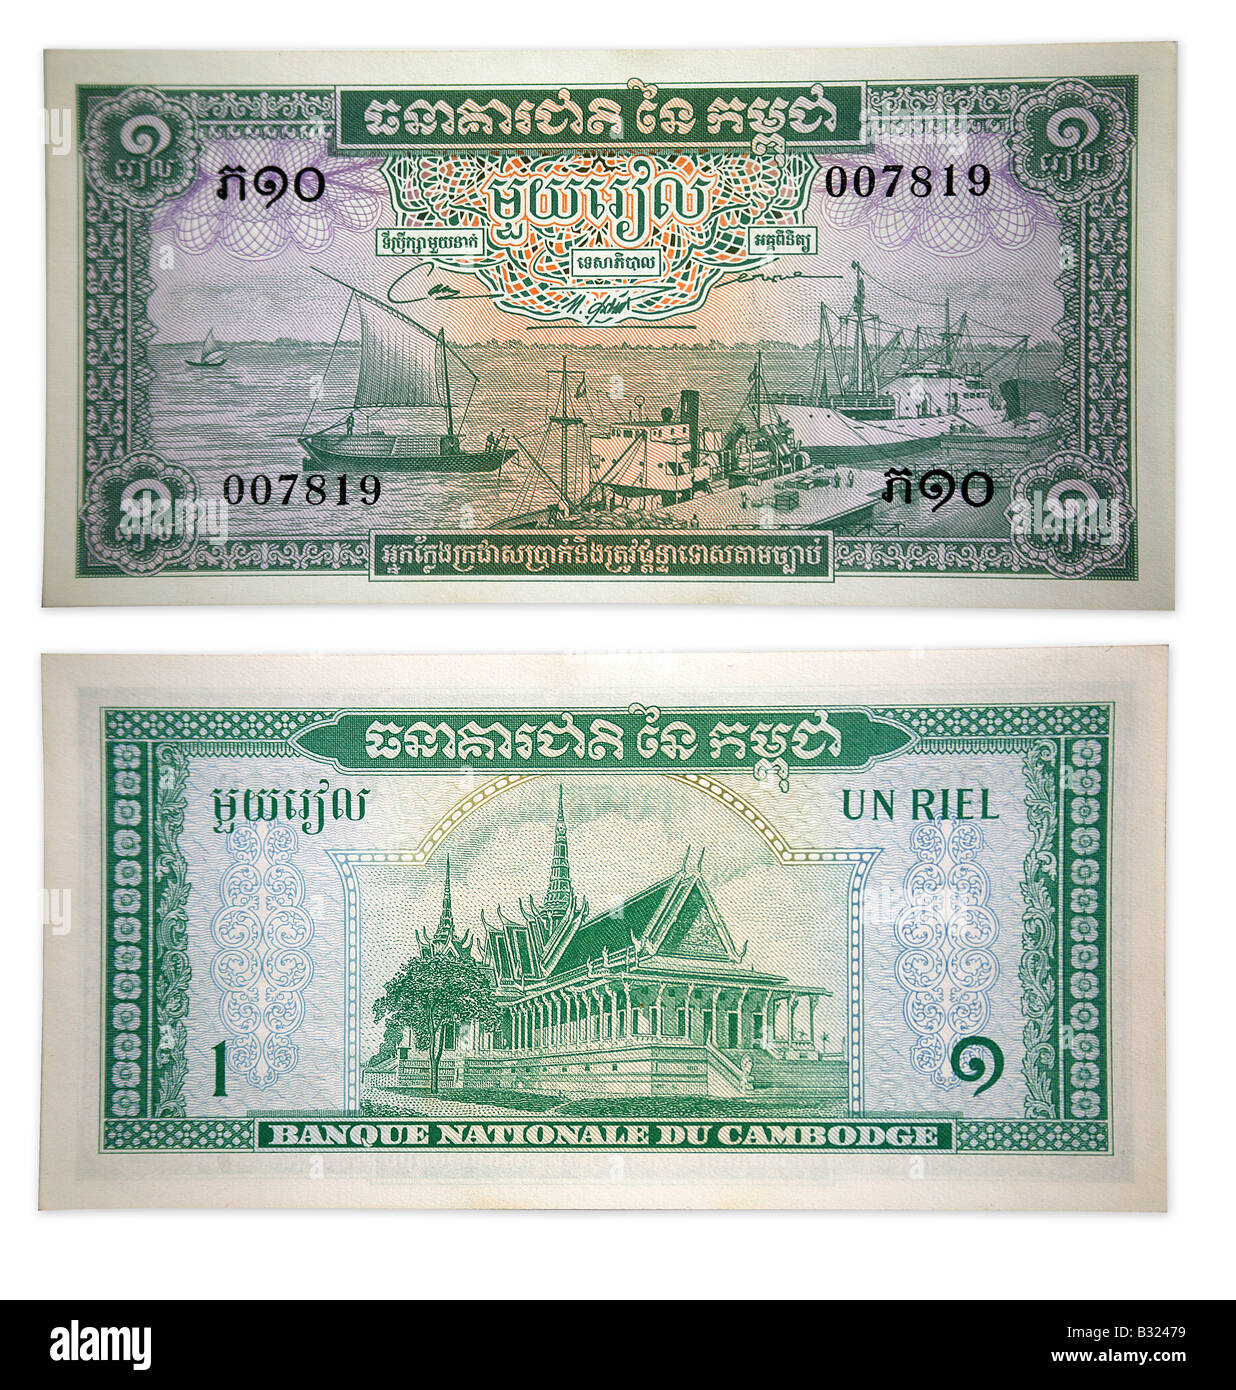 Bank notes from Cambodia, Cambodian Cambodge Stock Photo